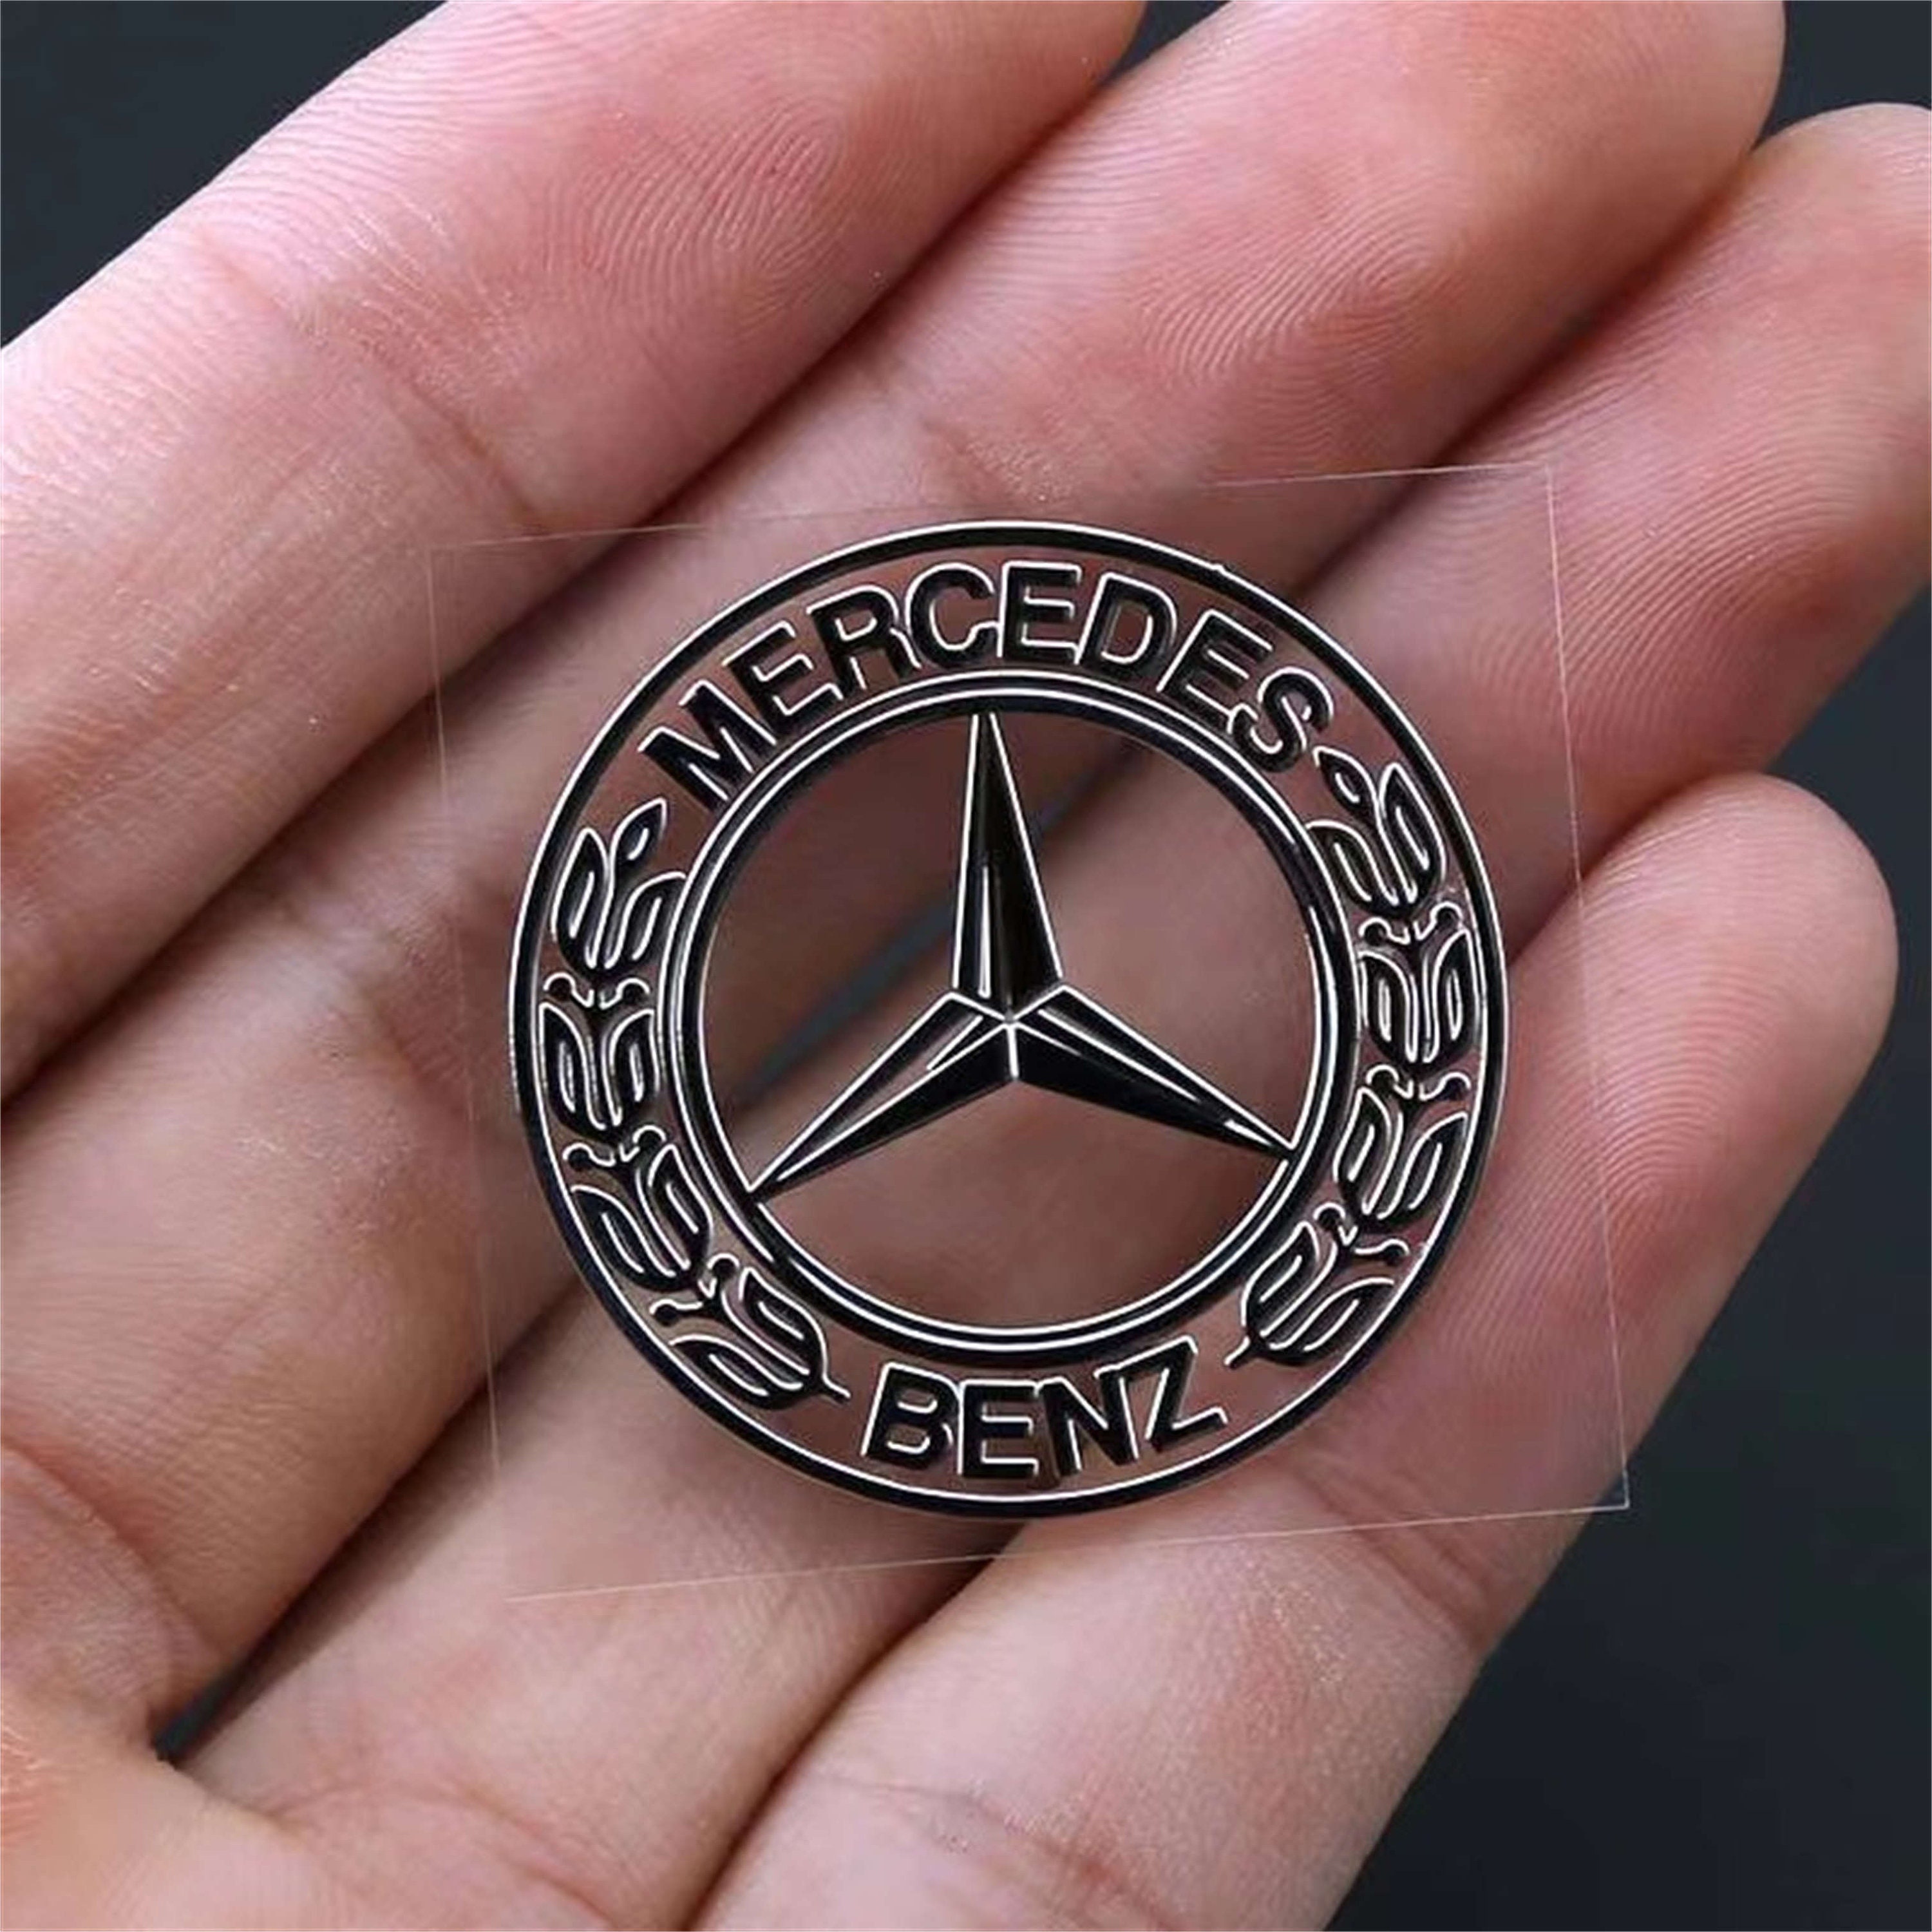 Buy Mercedes Auto Badge Online In India -  India